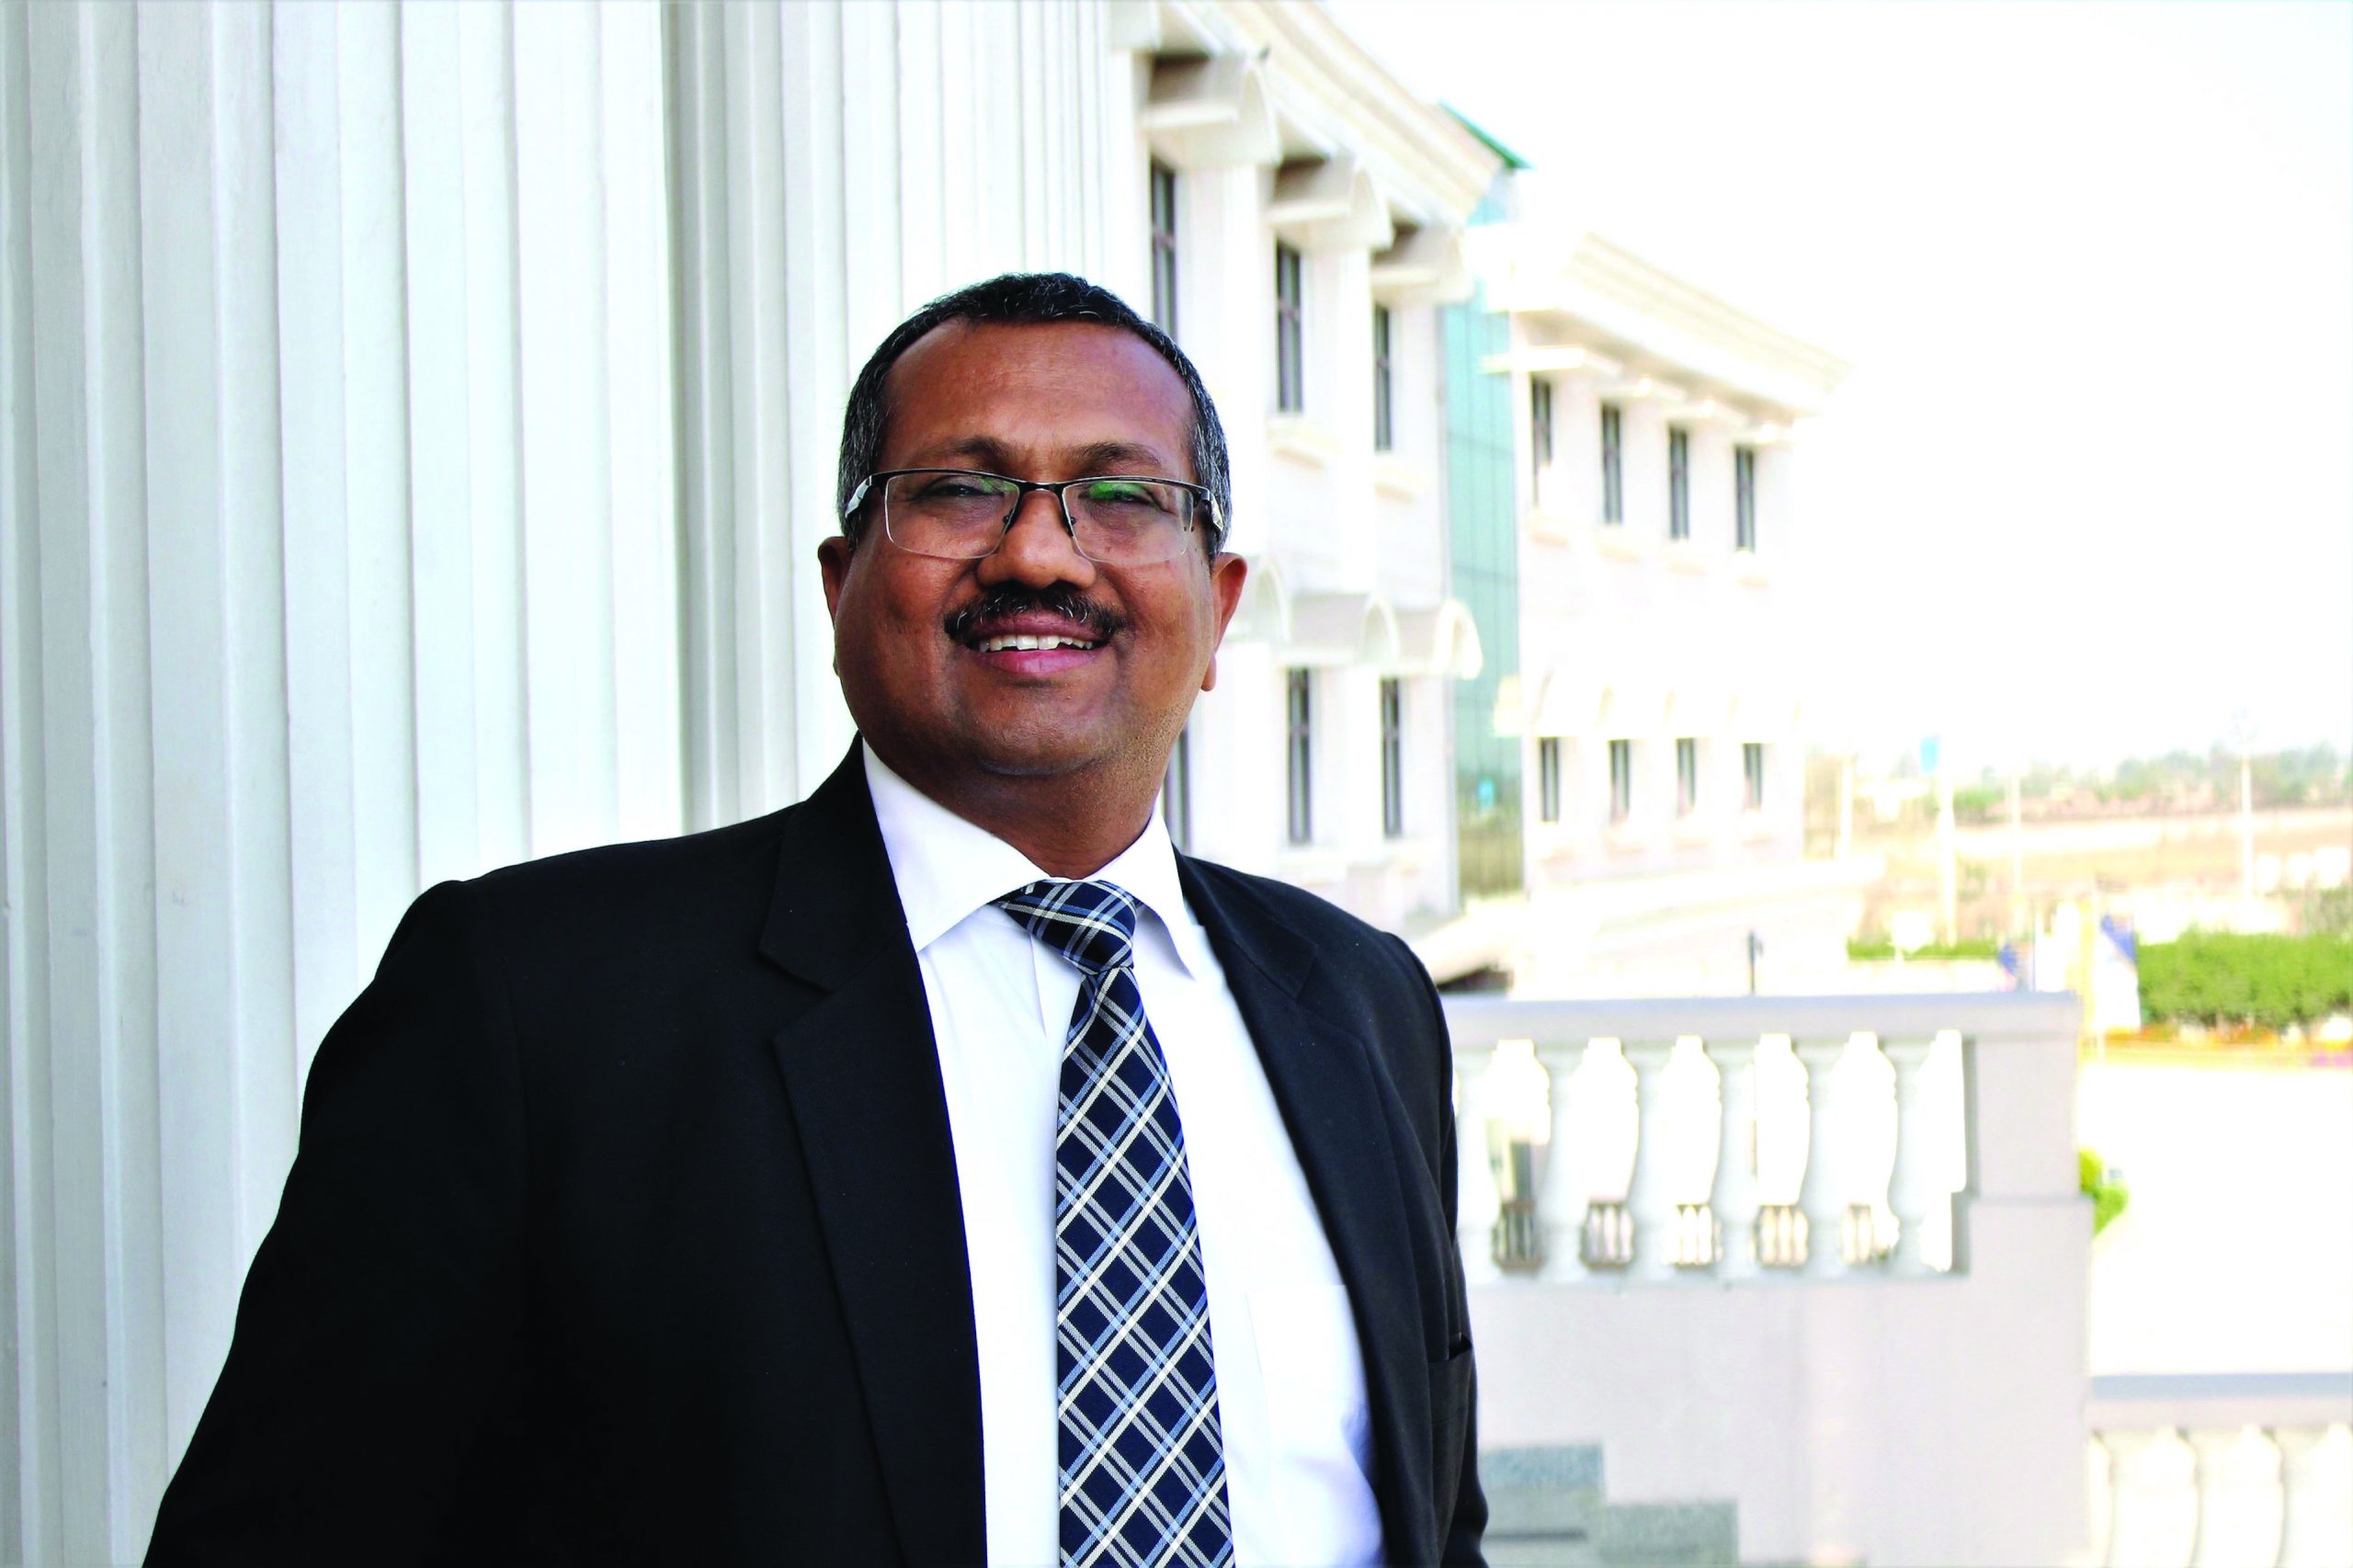 Dr Sanjay Gupta